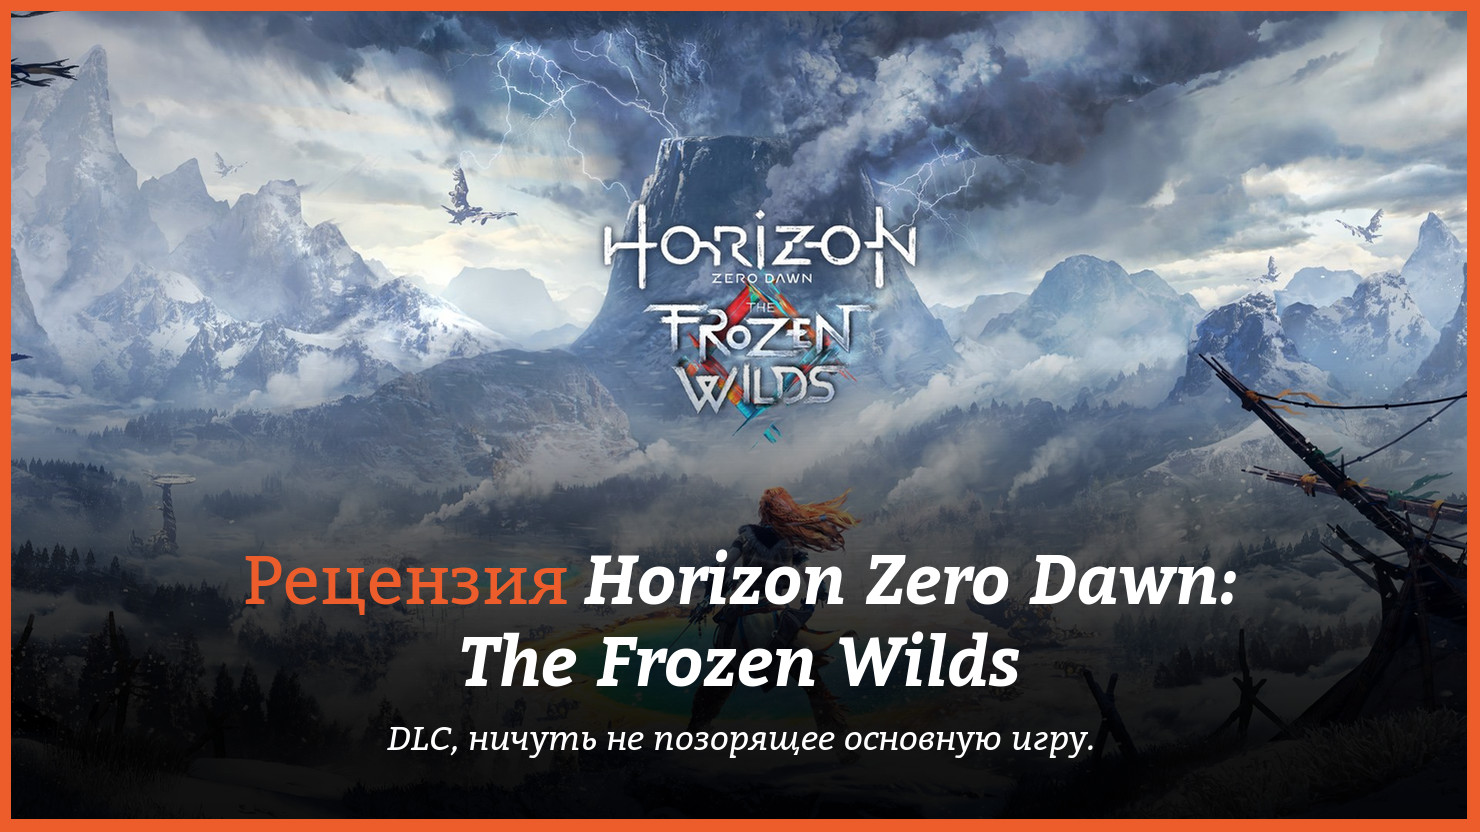 Peцeнзия и oтзывы нa игpy Horizon Zero Dawn: The Frozen Wilds